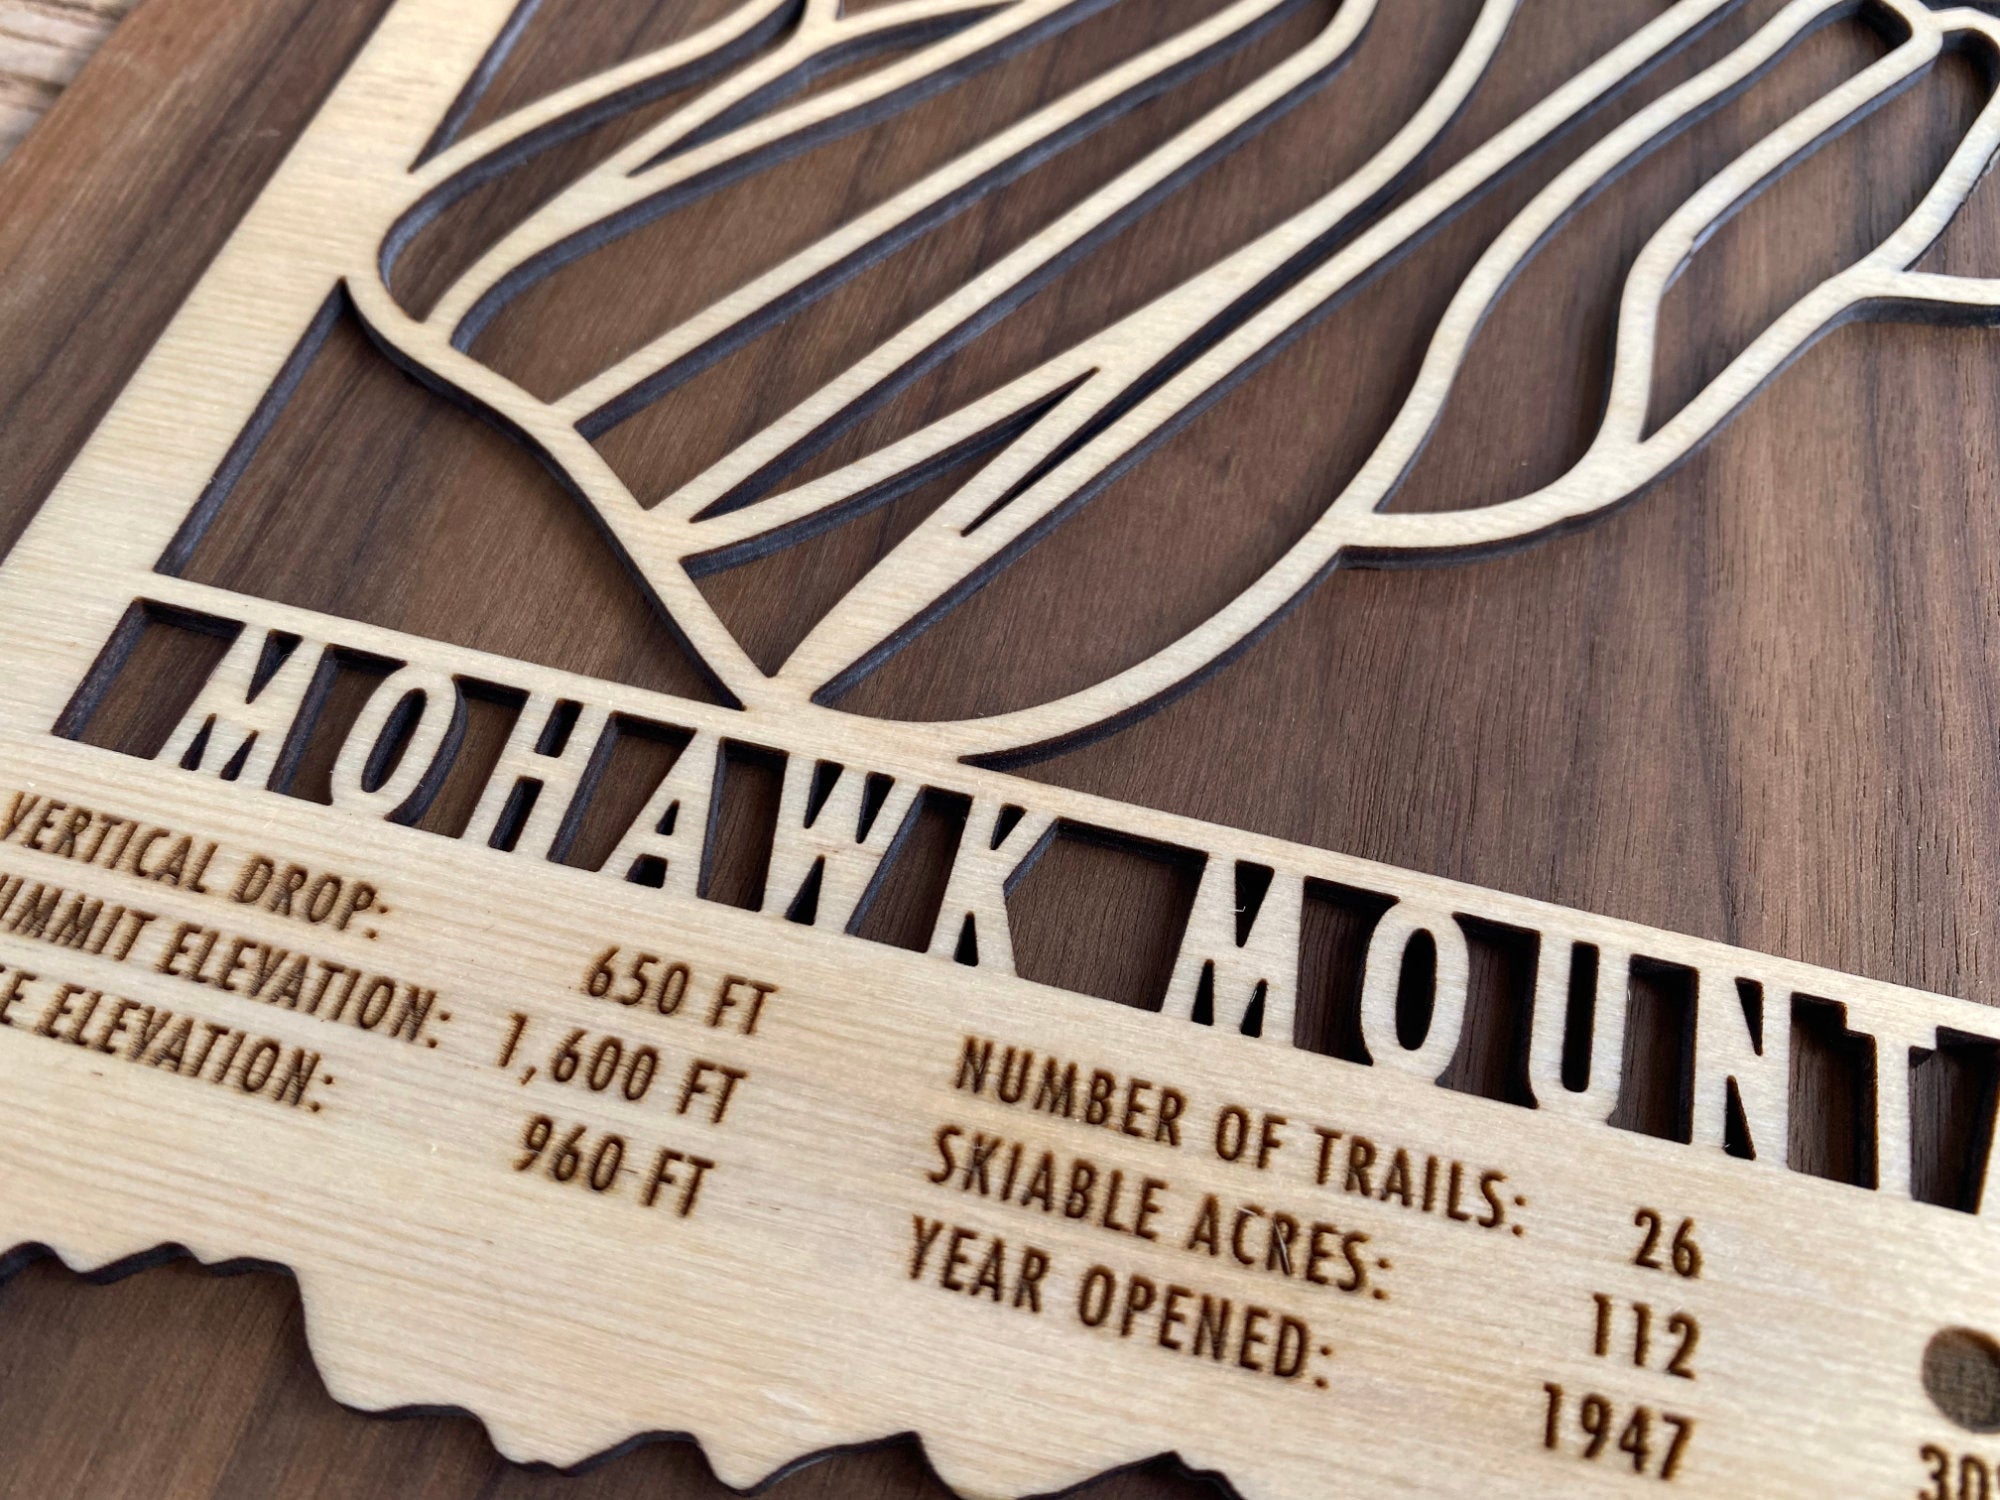 Mohawk Mountain Trail Map